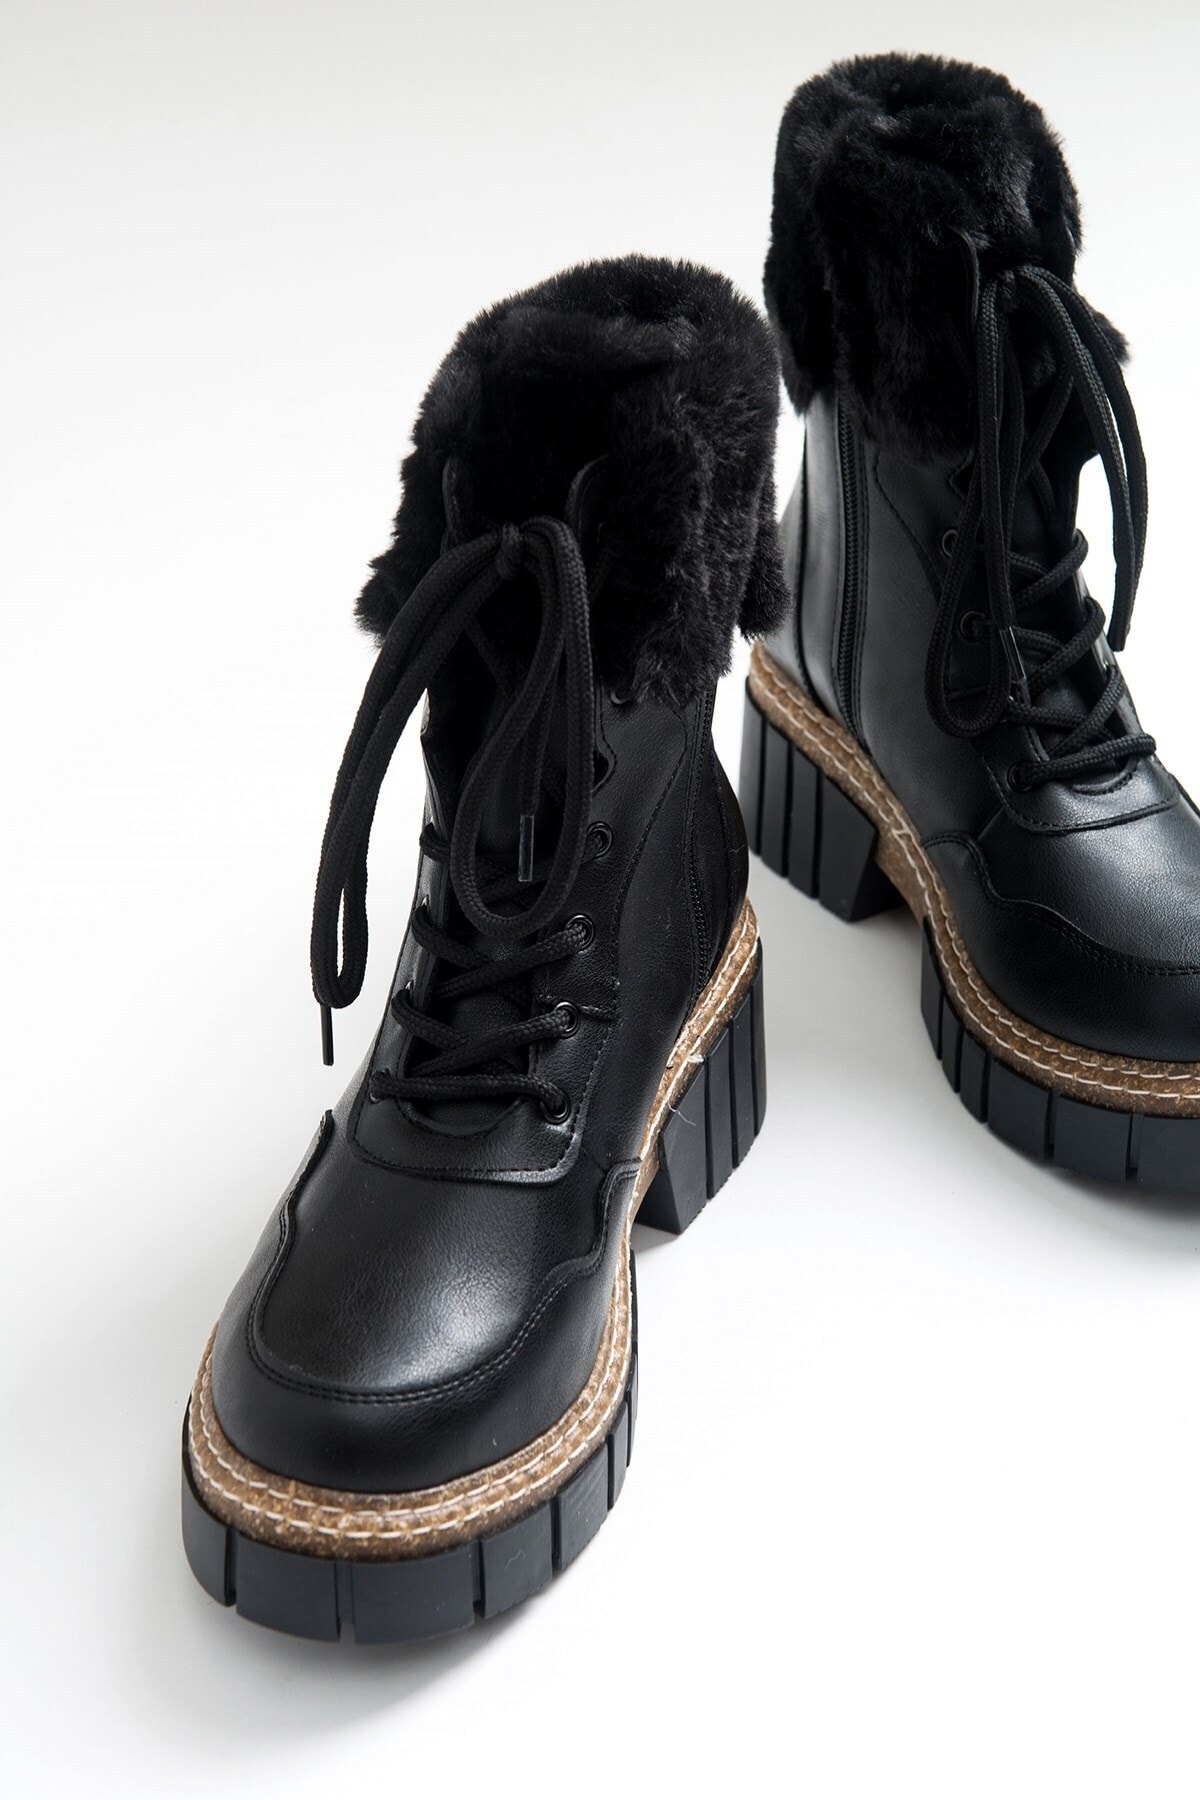 LuviShoes Faıth Black Skin Women's Boots